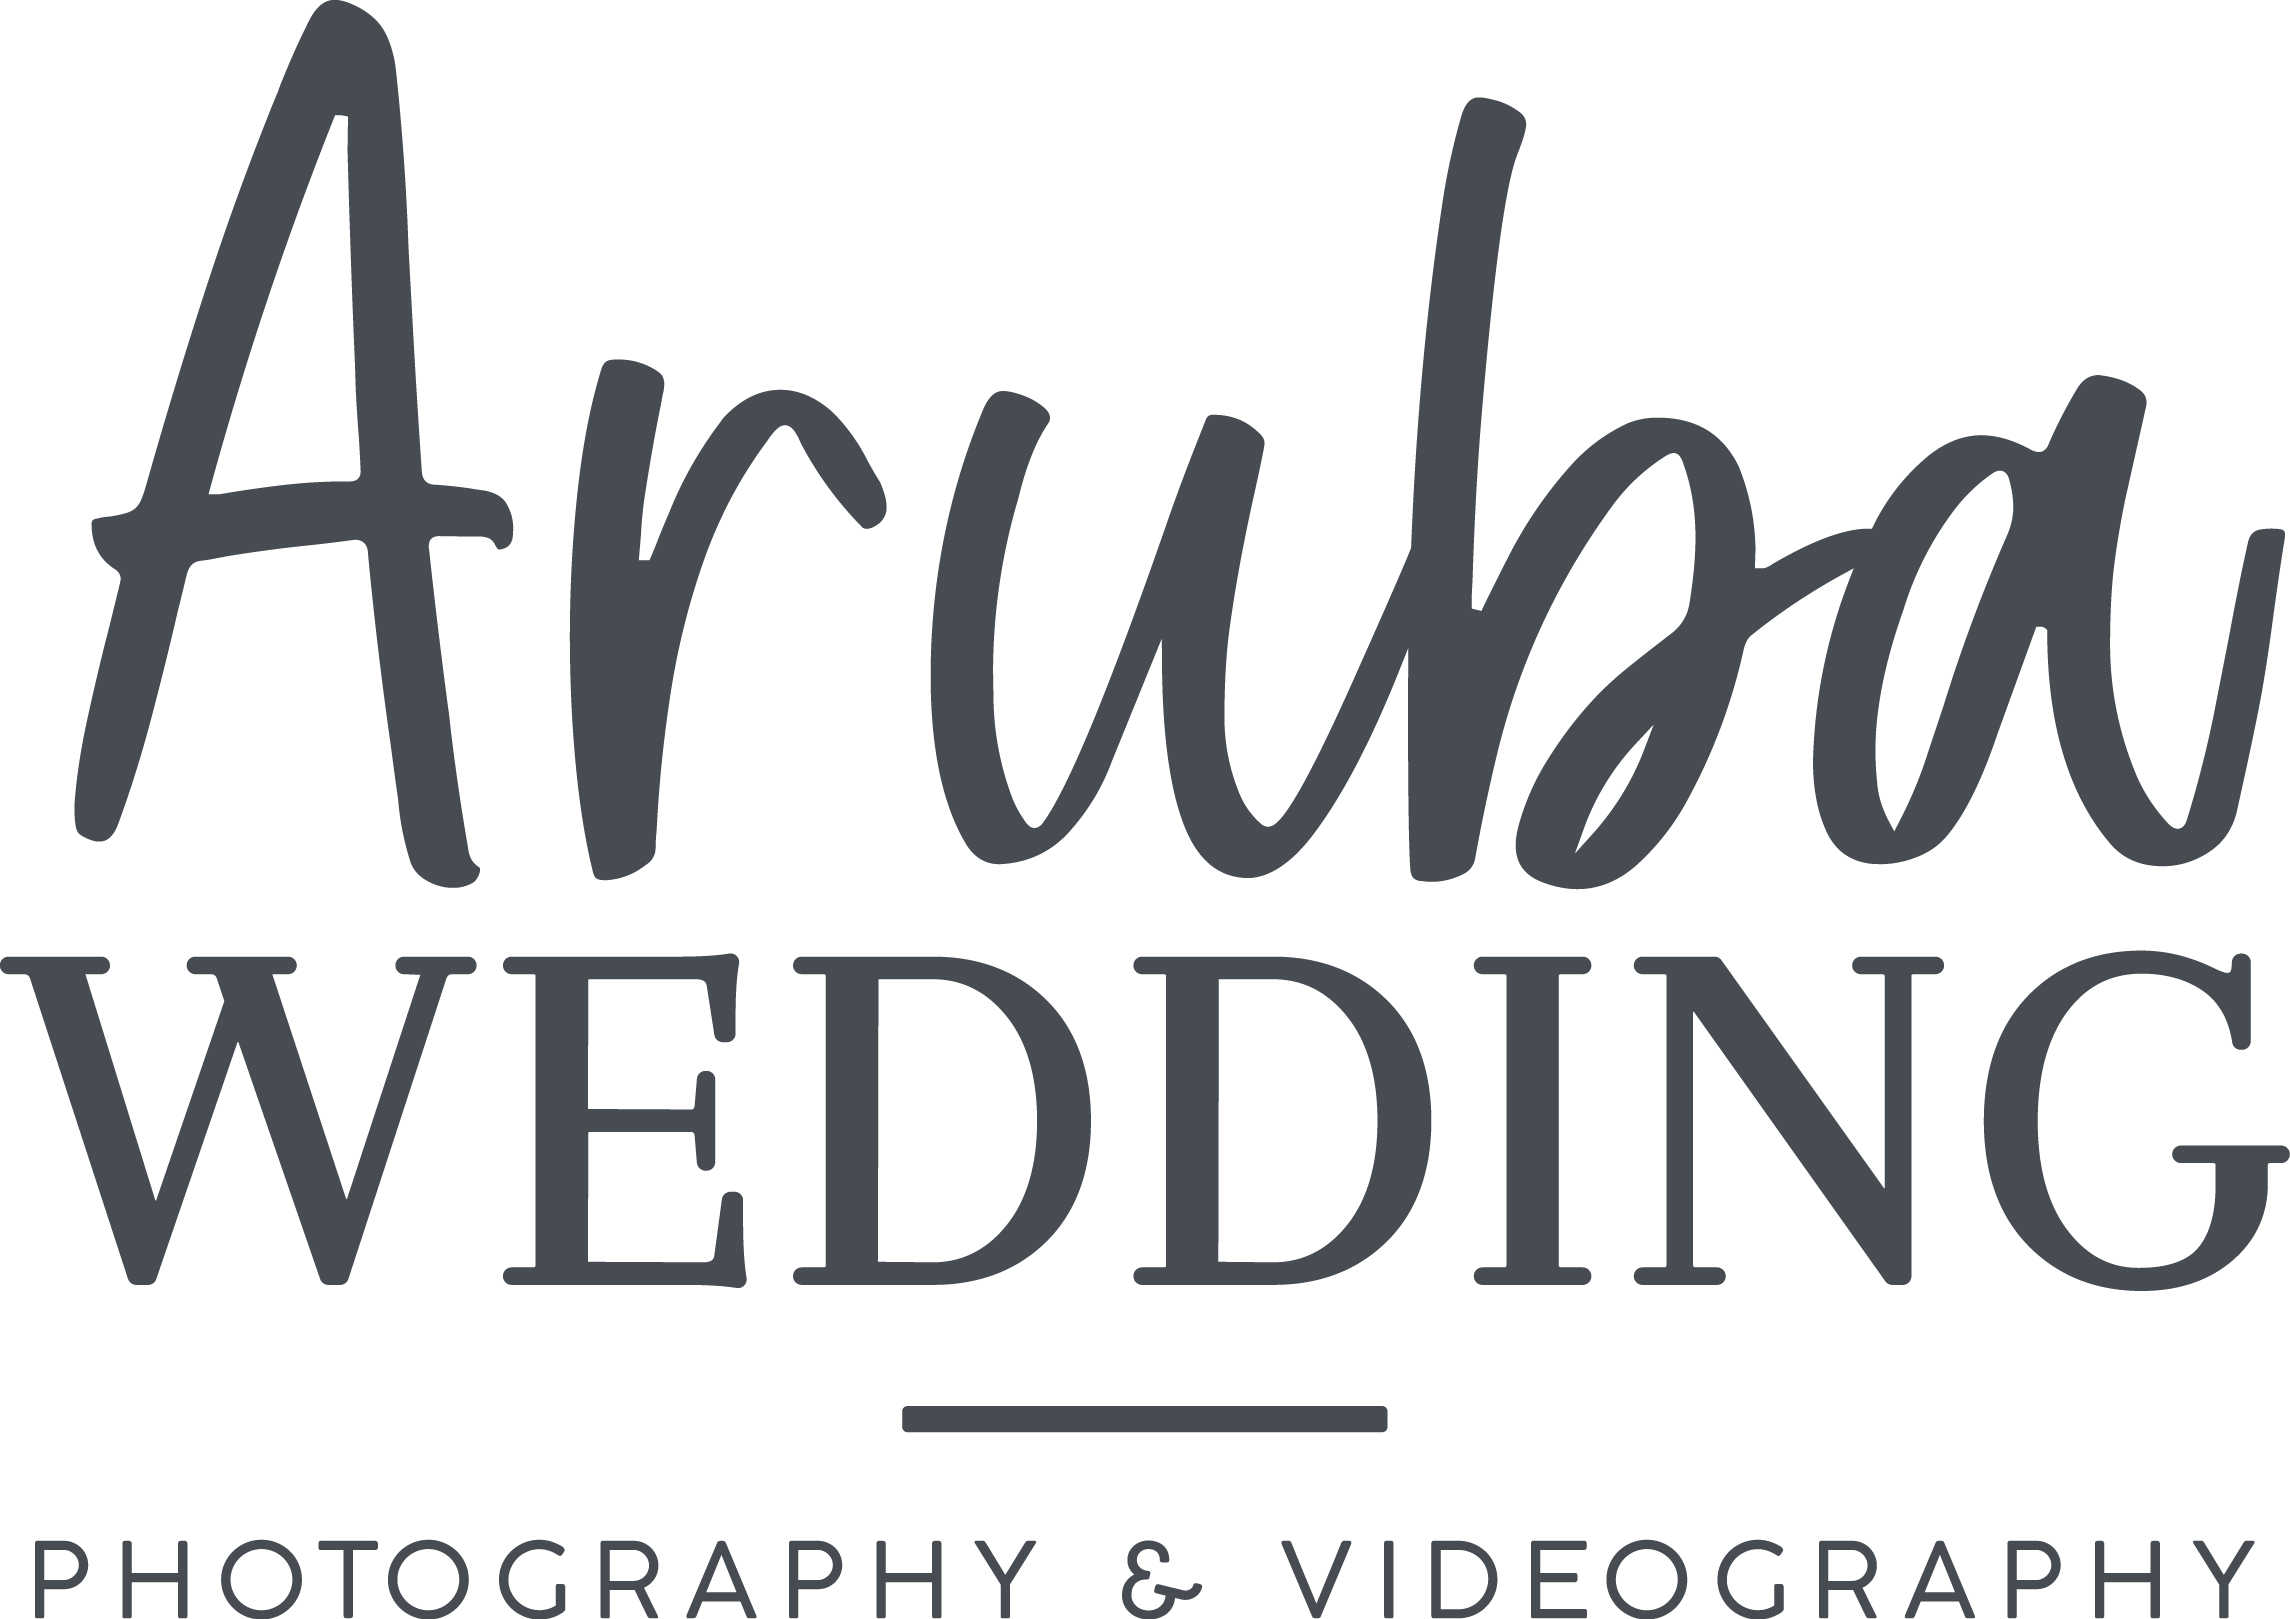 aruba wedding website logo